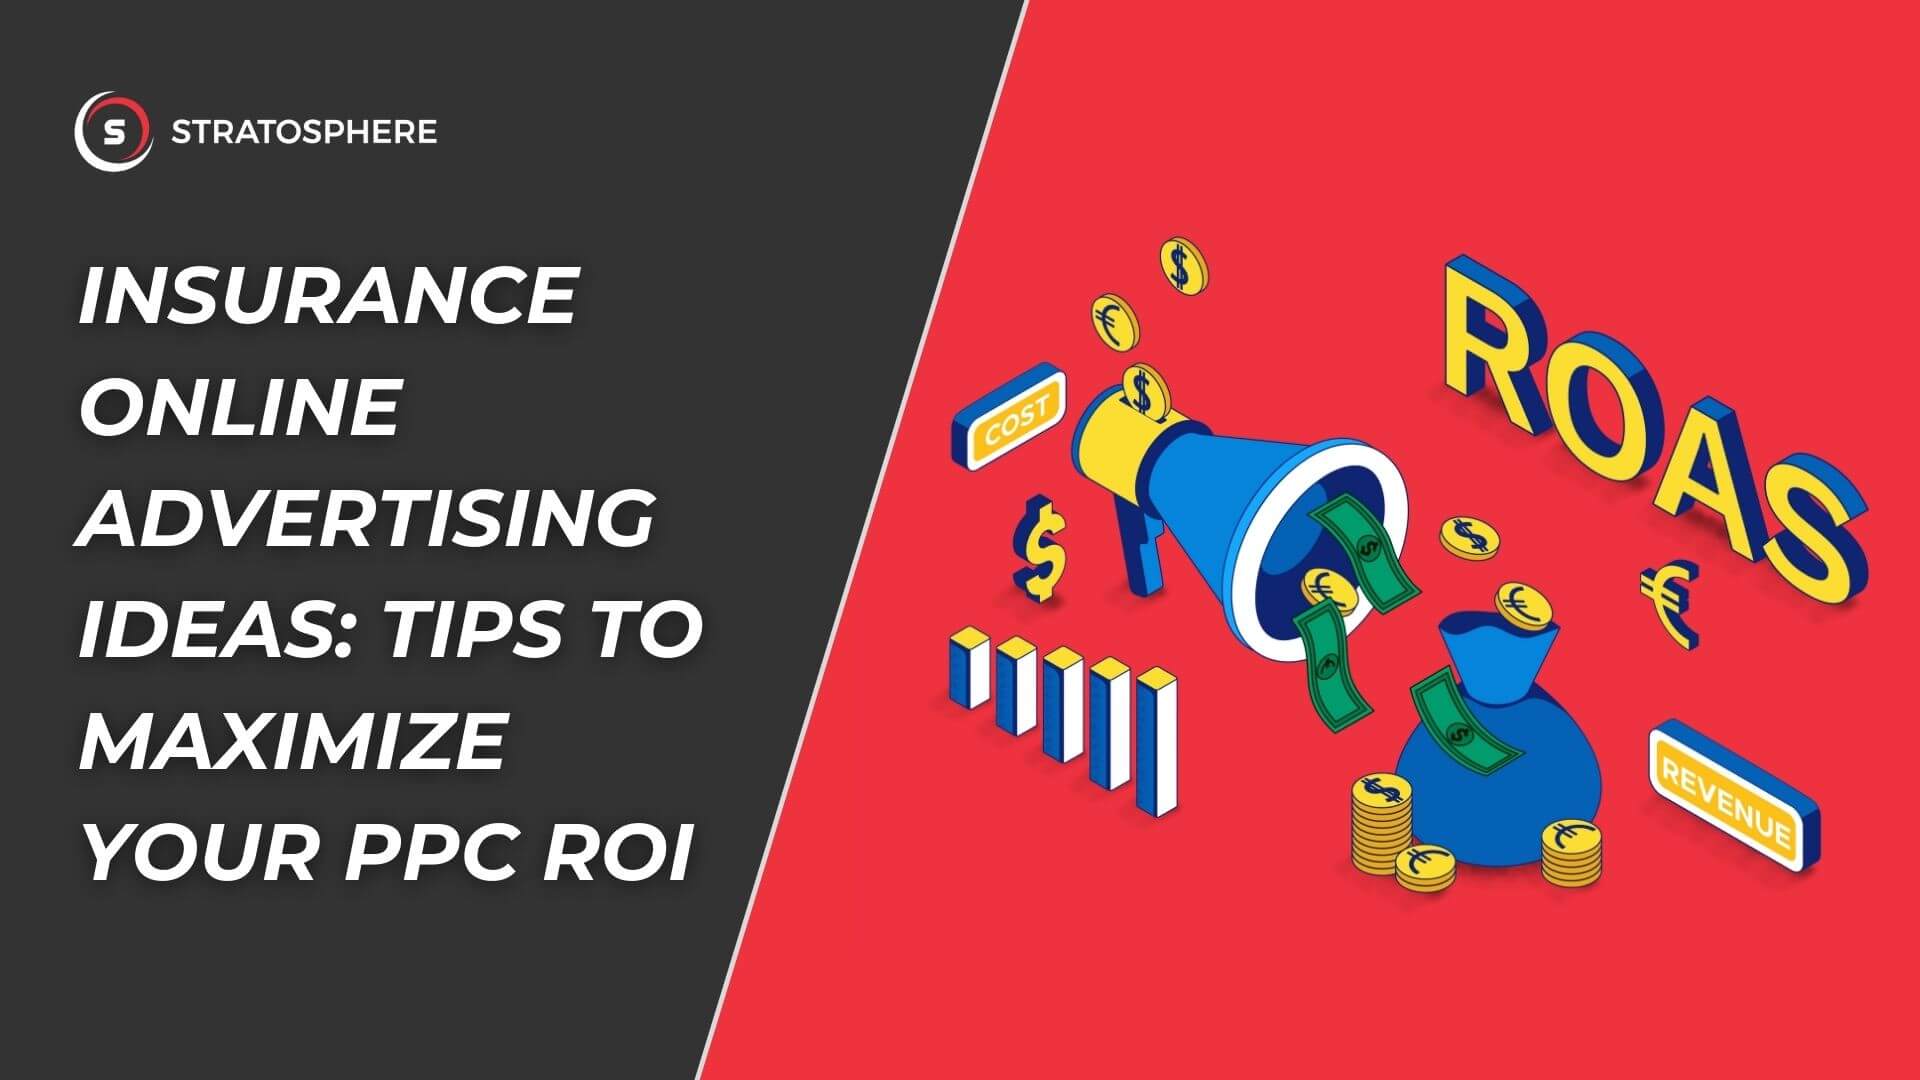 Insurance Online Advertising Ideas: 9 Tips to Maximize PPC ROI